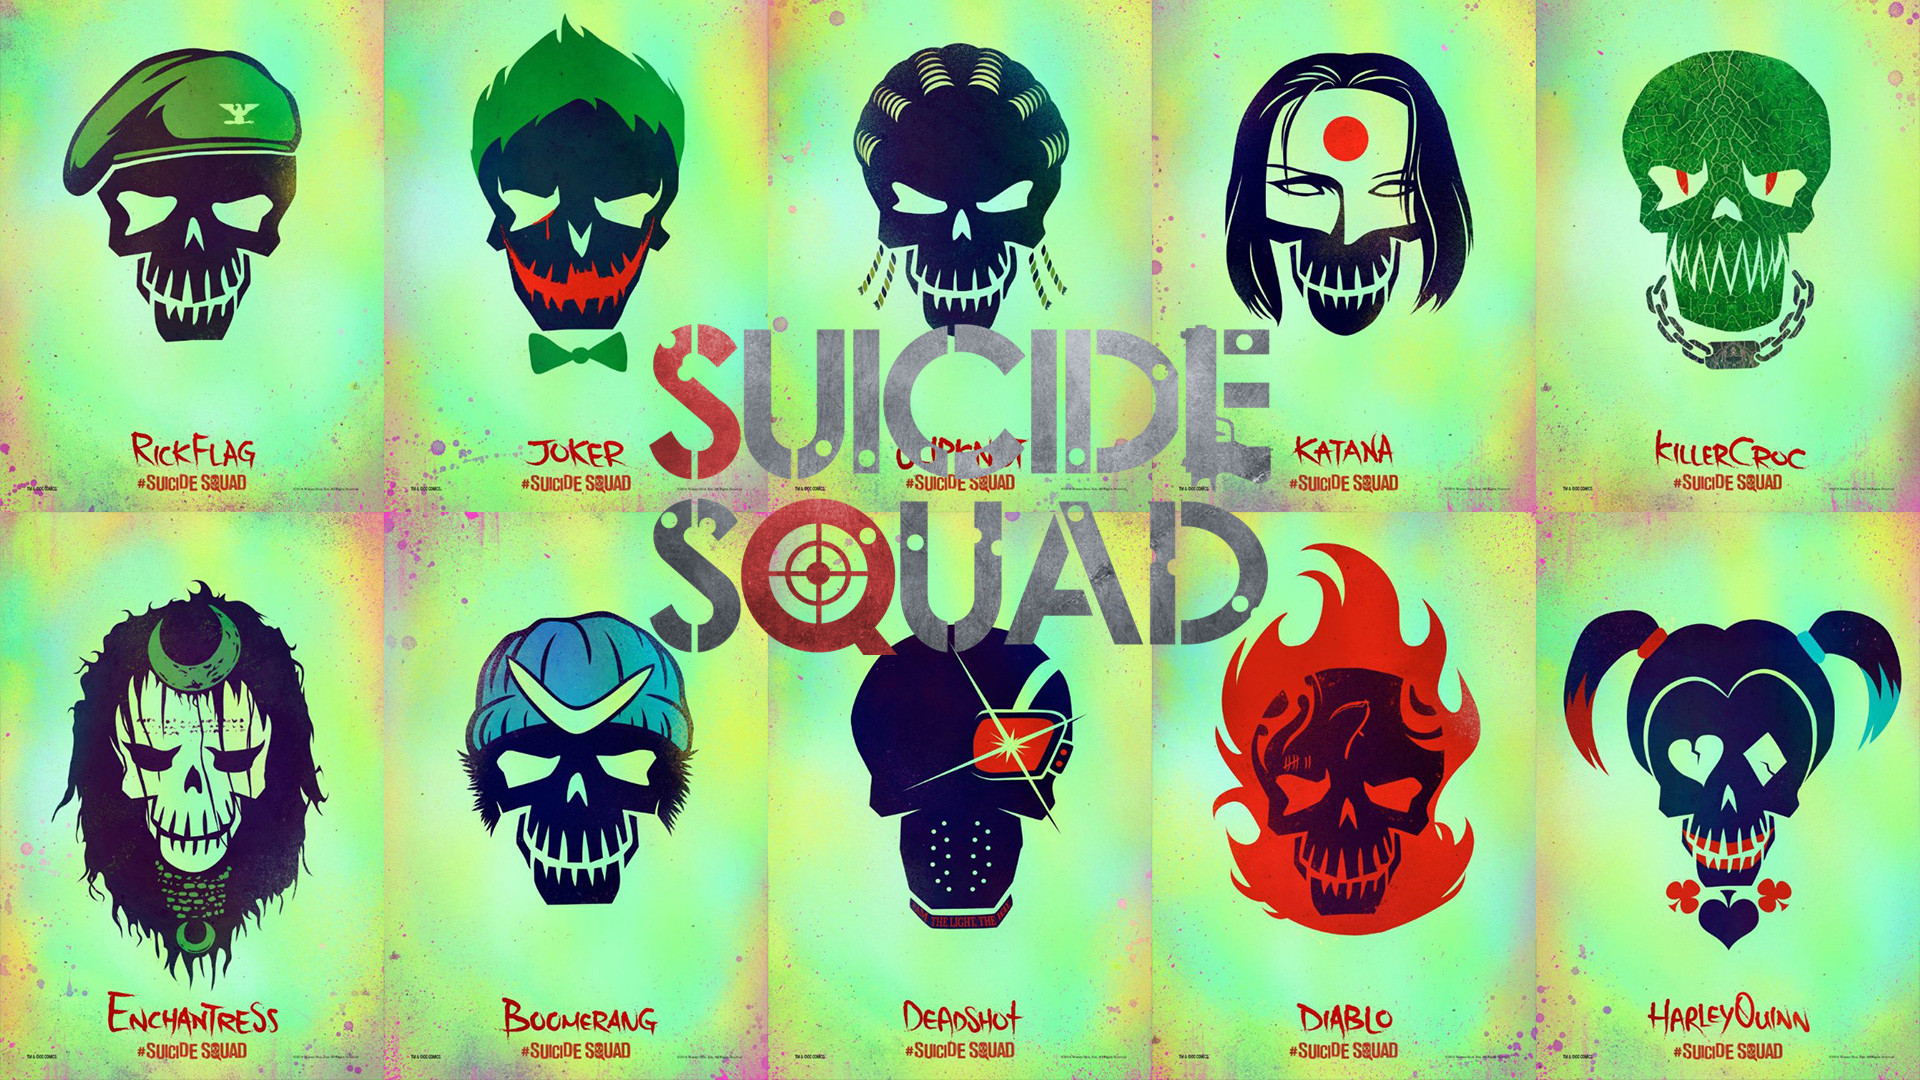 Suicide Squad Joker Wallpaper Image